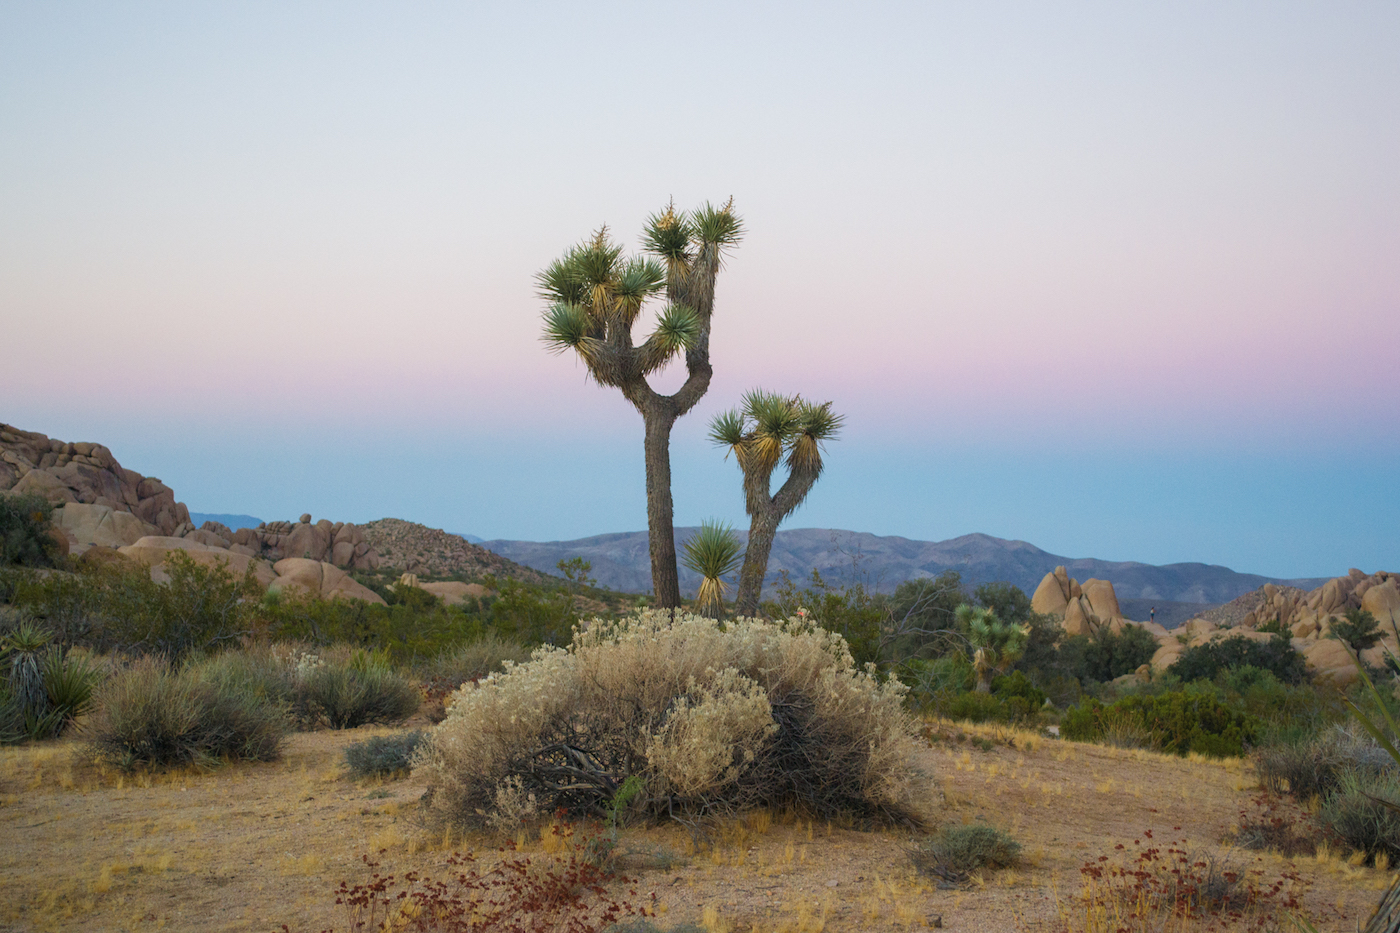 Joshua Tree in California has very unique cactus trees and unique rock formations.